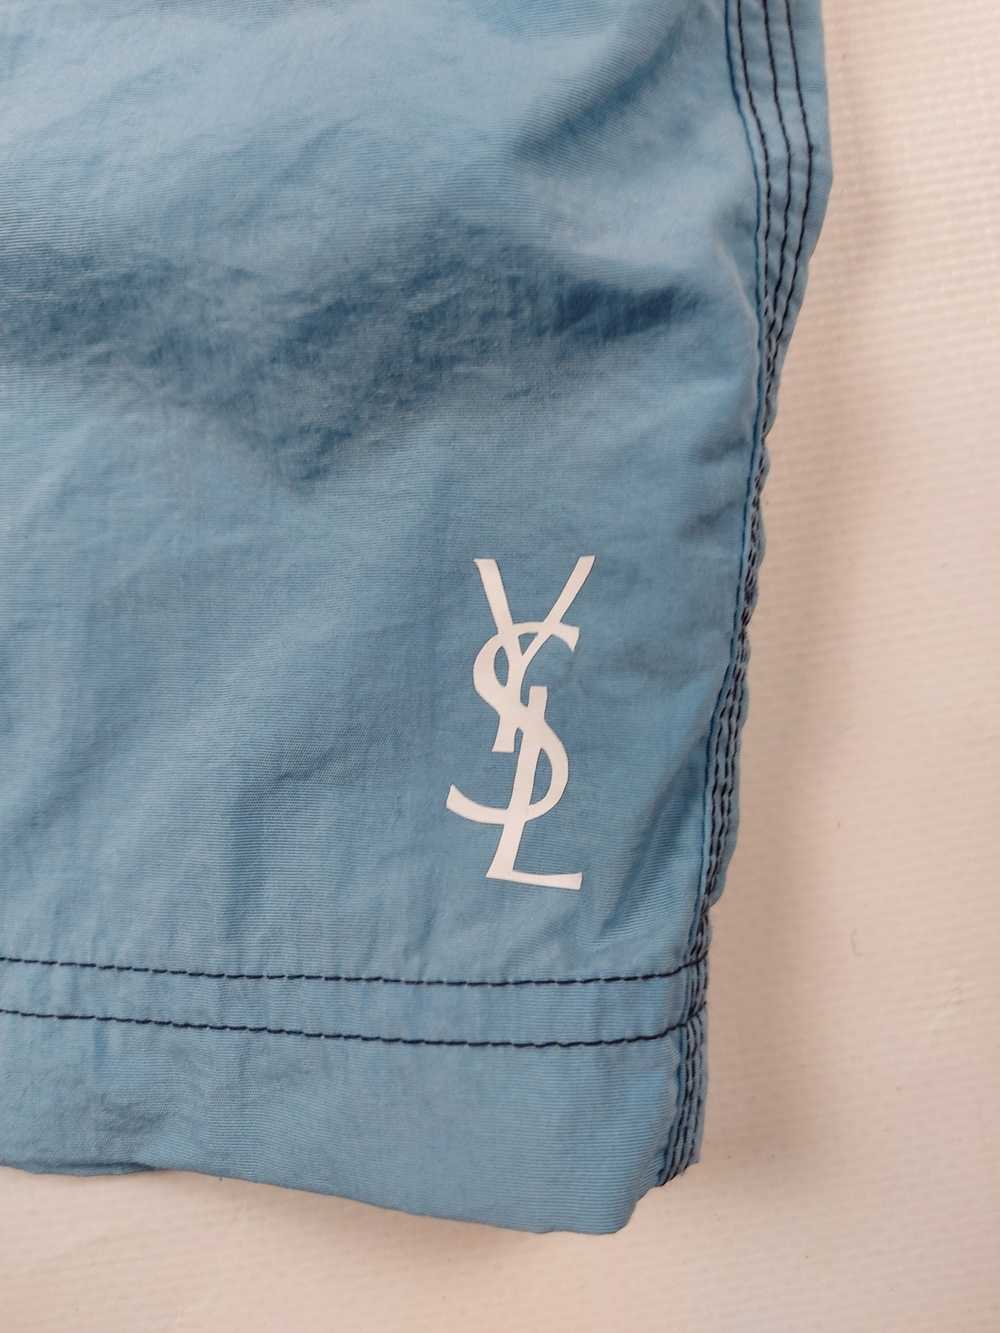 Yves Saint Laurent Vintage Yves Saint Laurent Sho… - image 4